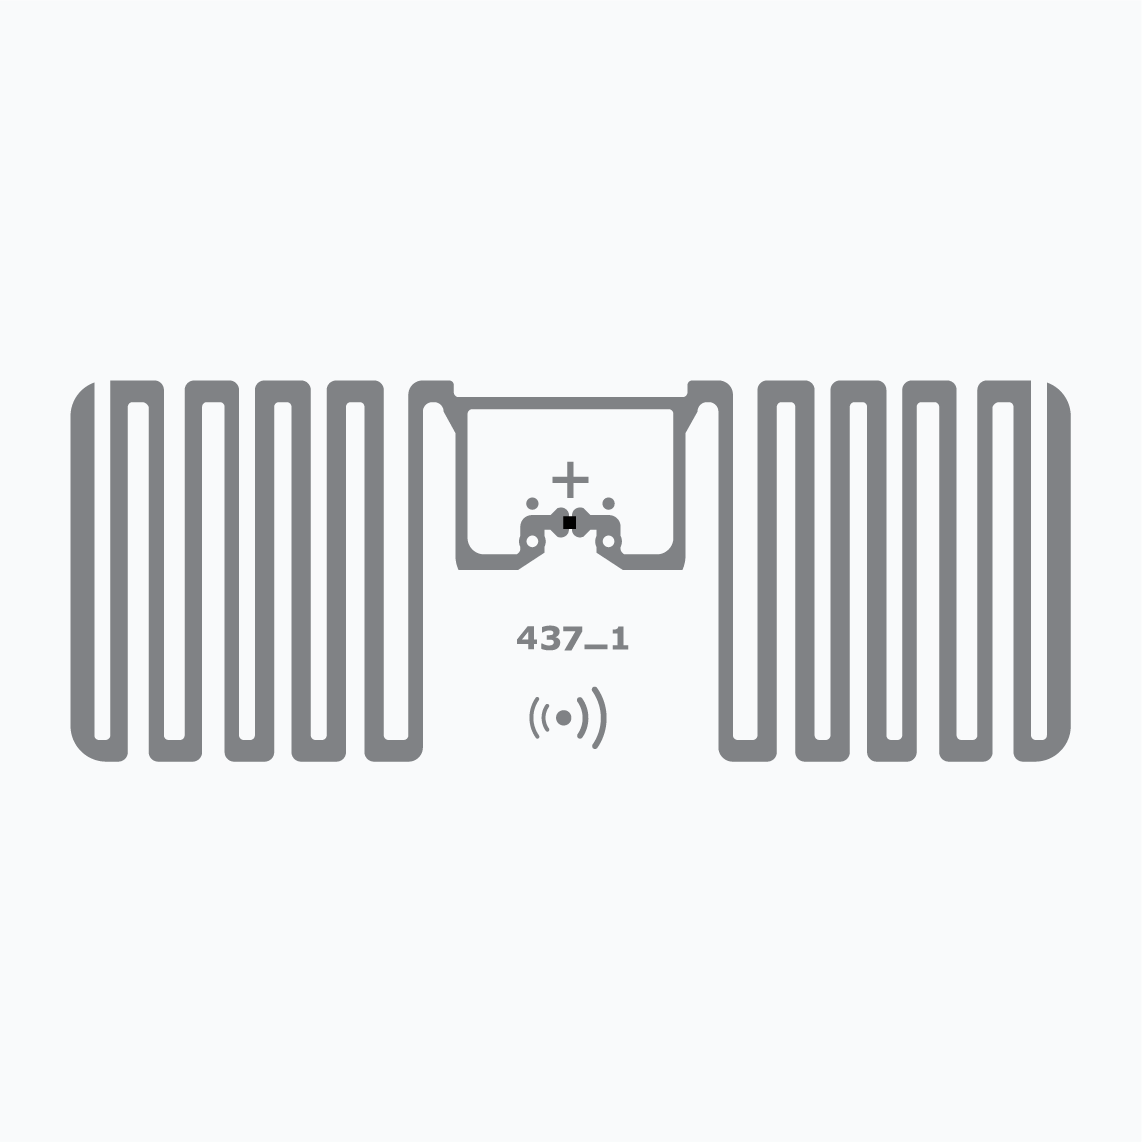 UHF RFID Inlay： Miniweb，Monza R6